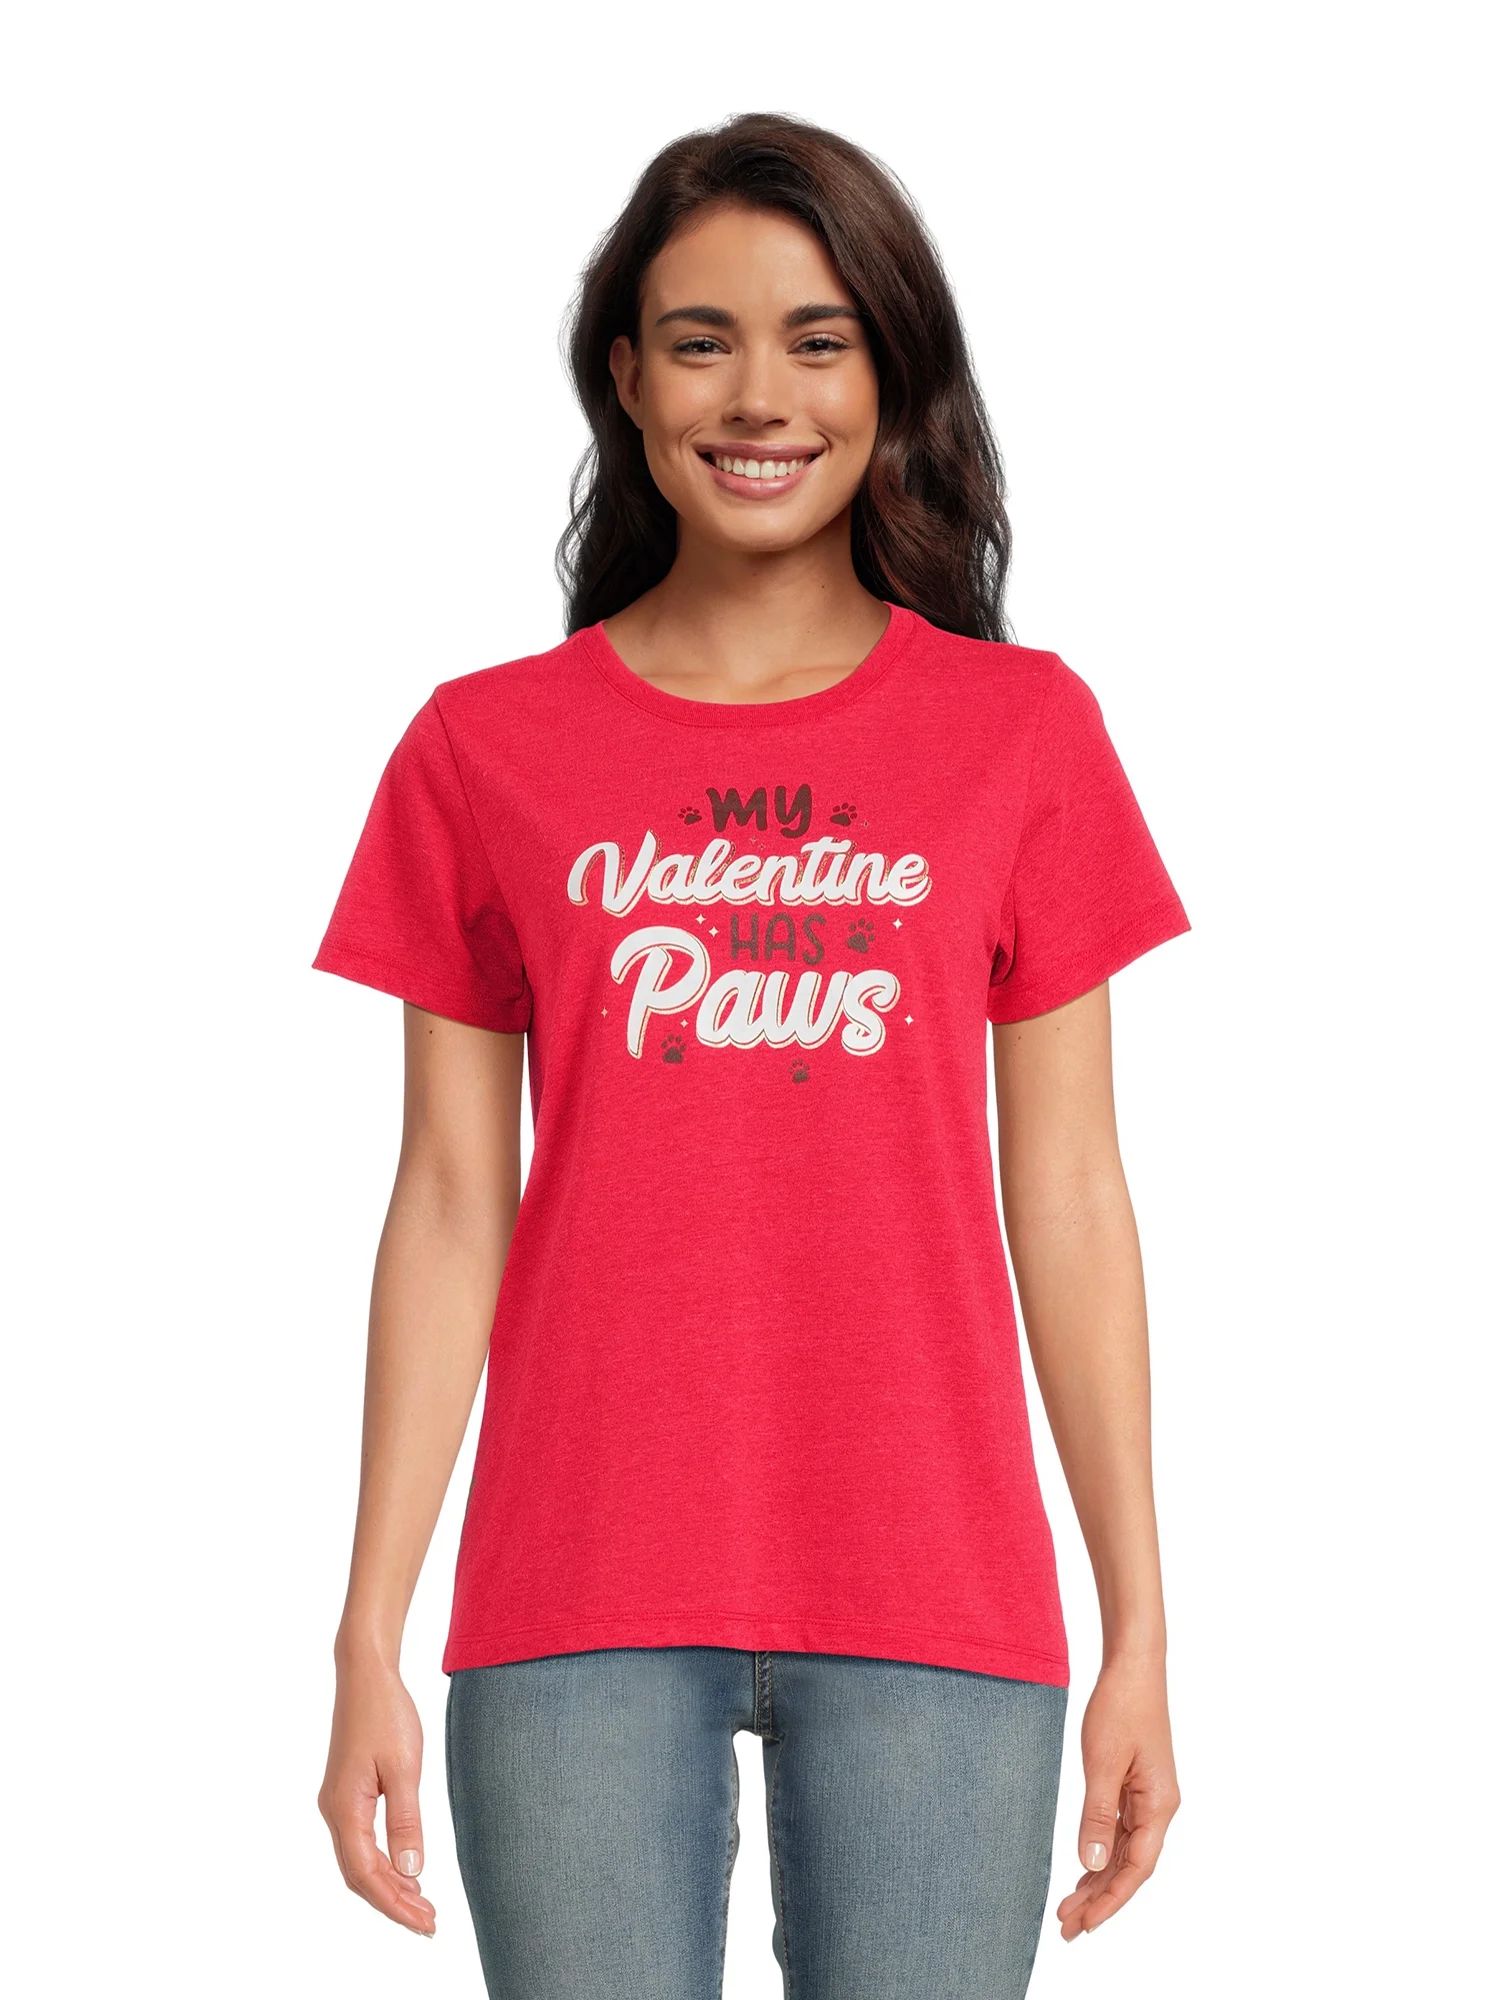 Valentine's Women's Valentine Paws Graphic T-Shirt, by Way to Celebrate, Sizes S-3XL | Walmart (US)